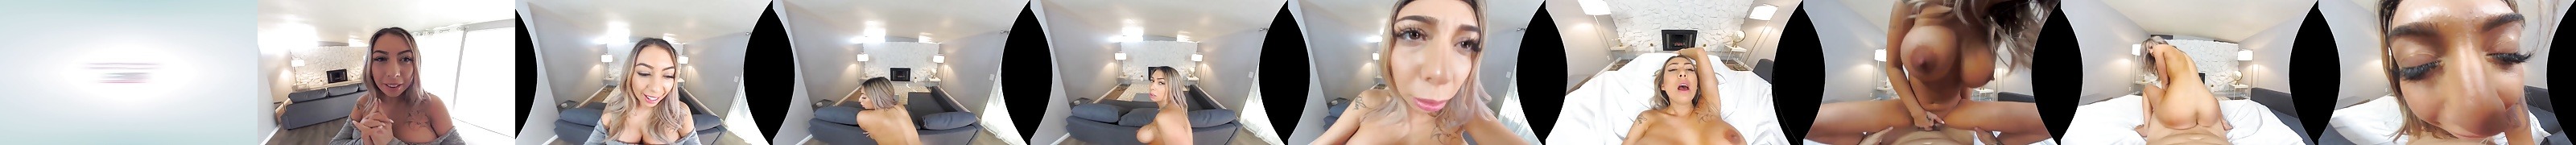 Kat Dior Free Porn Star Videos 157 Xhamster